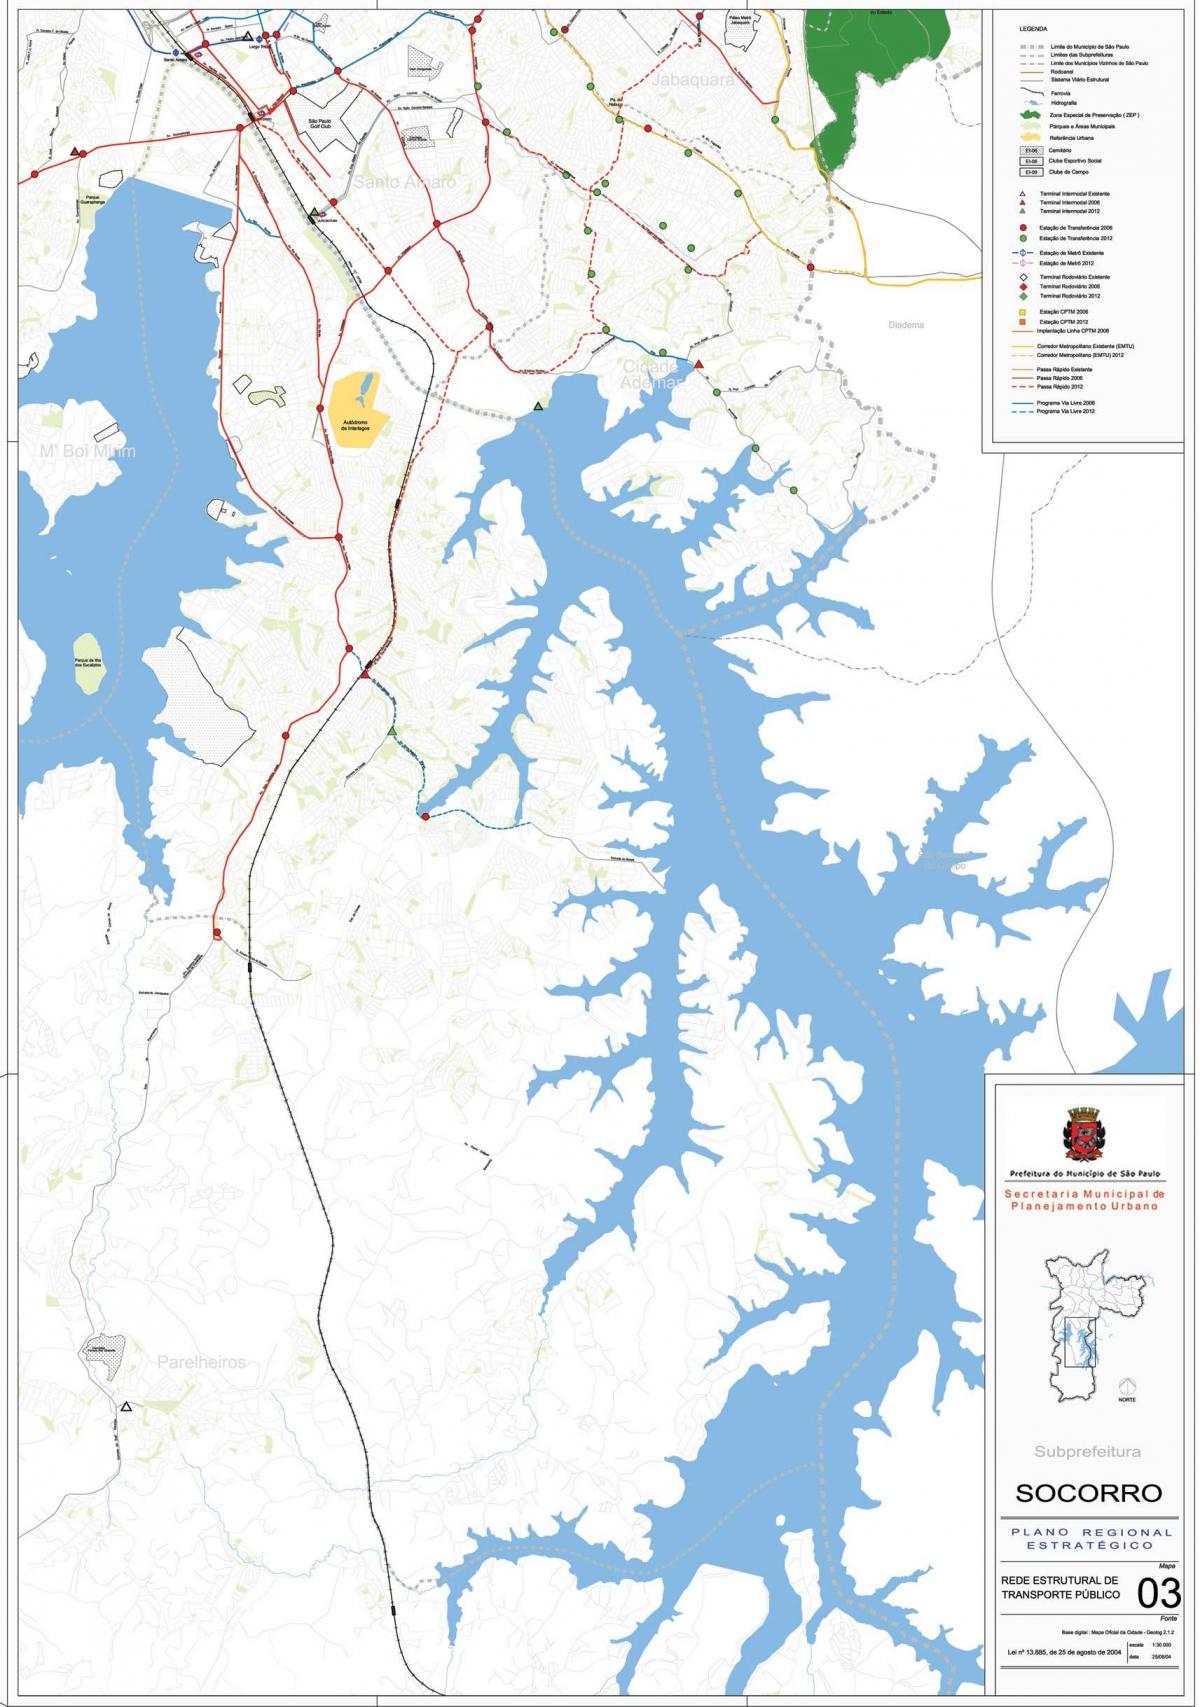 Peta dari Capela do Socorro Sao Paulo - Jalan